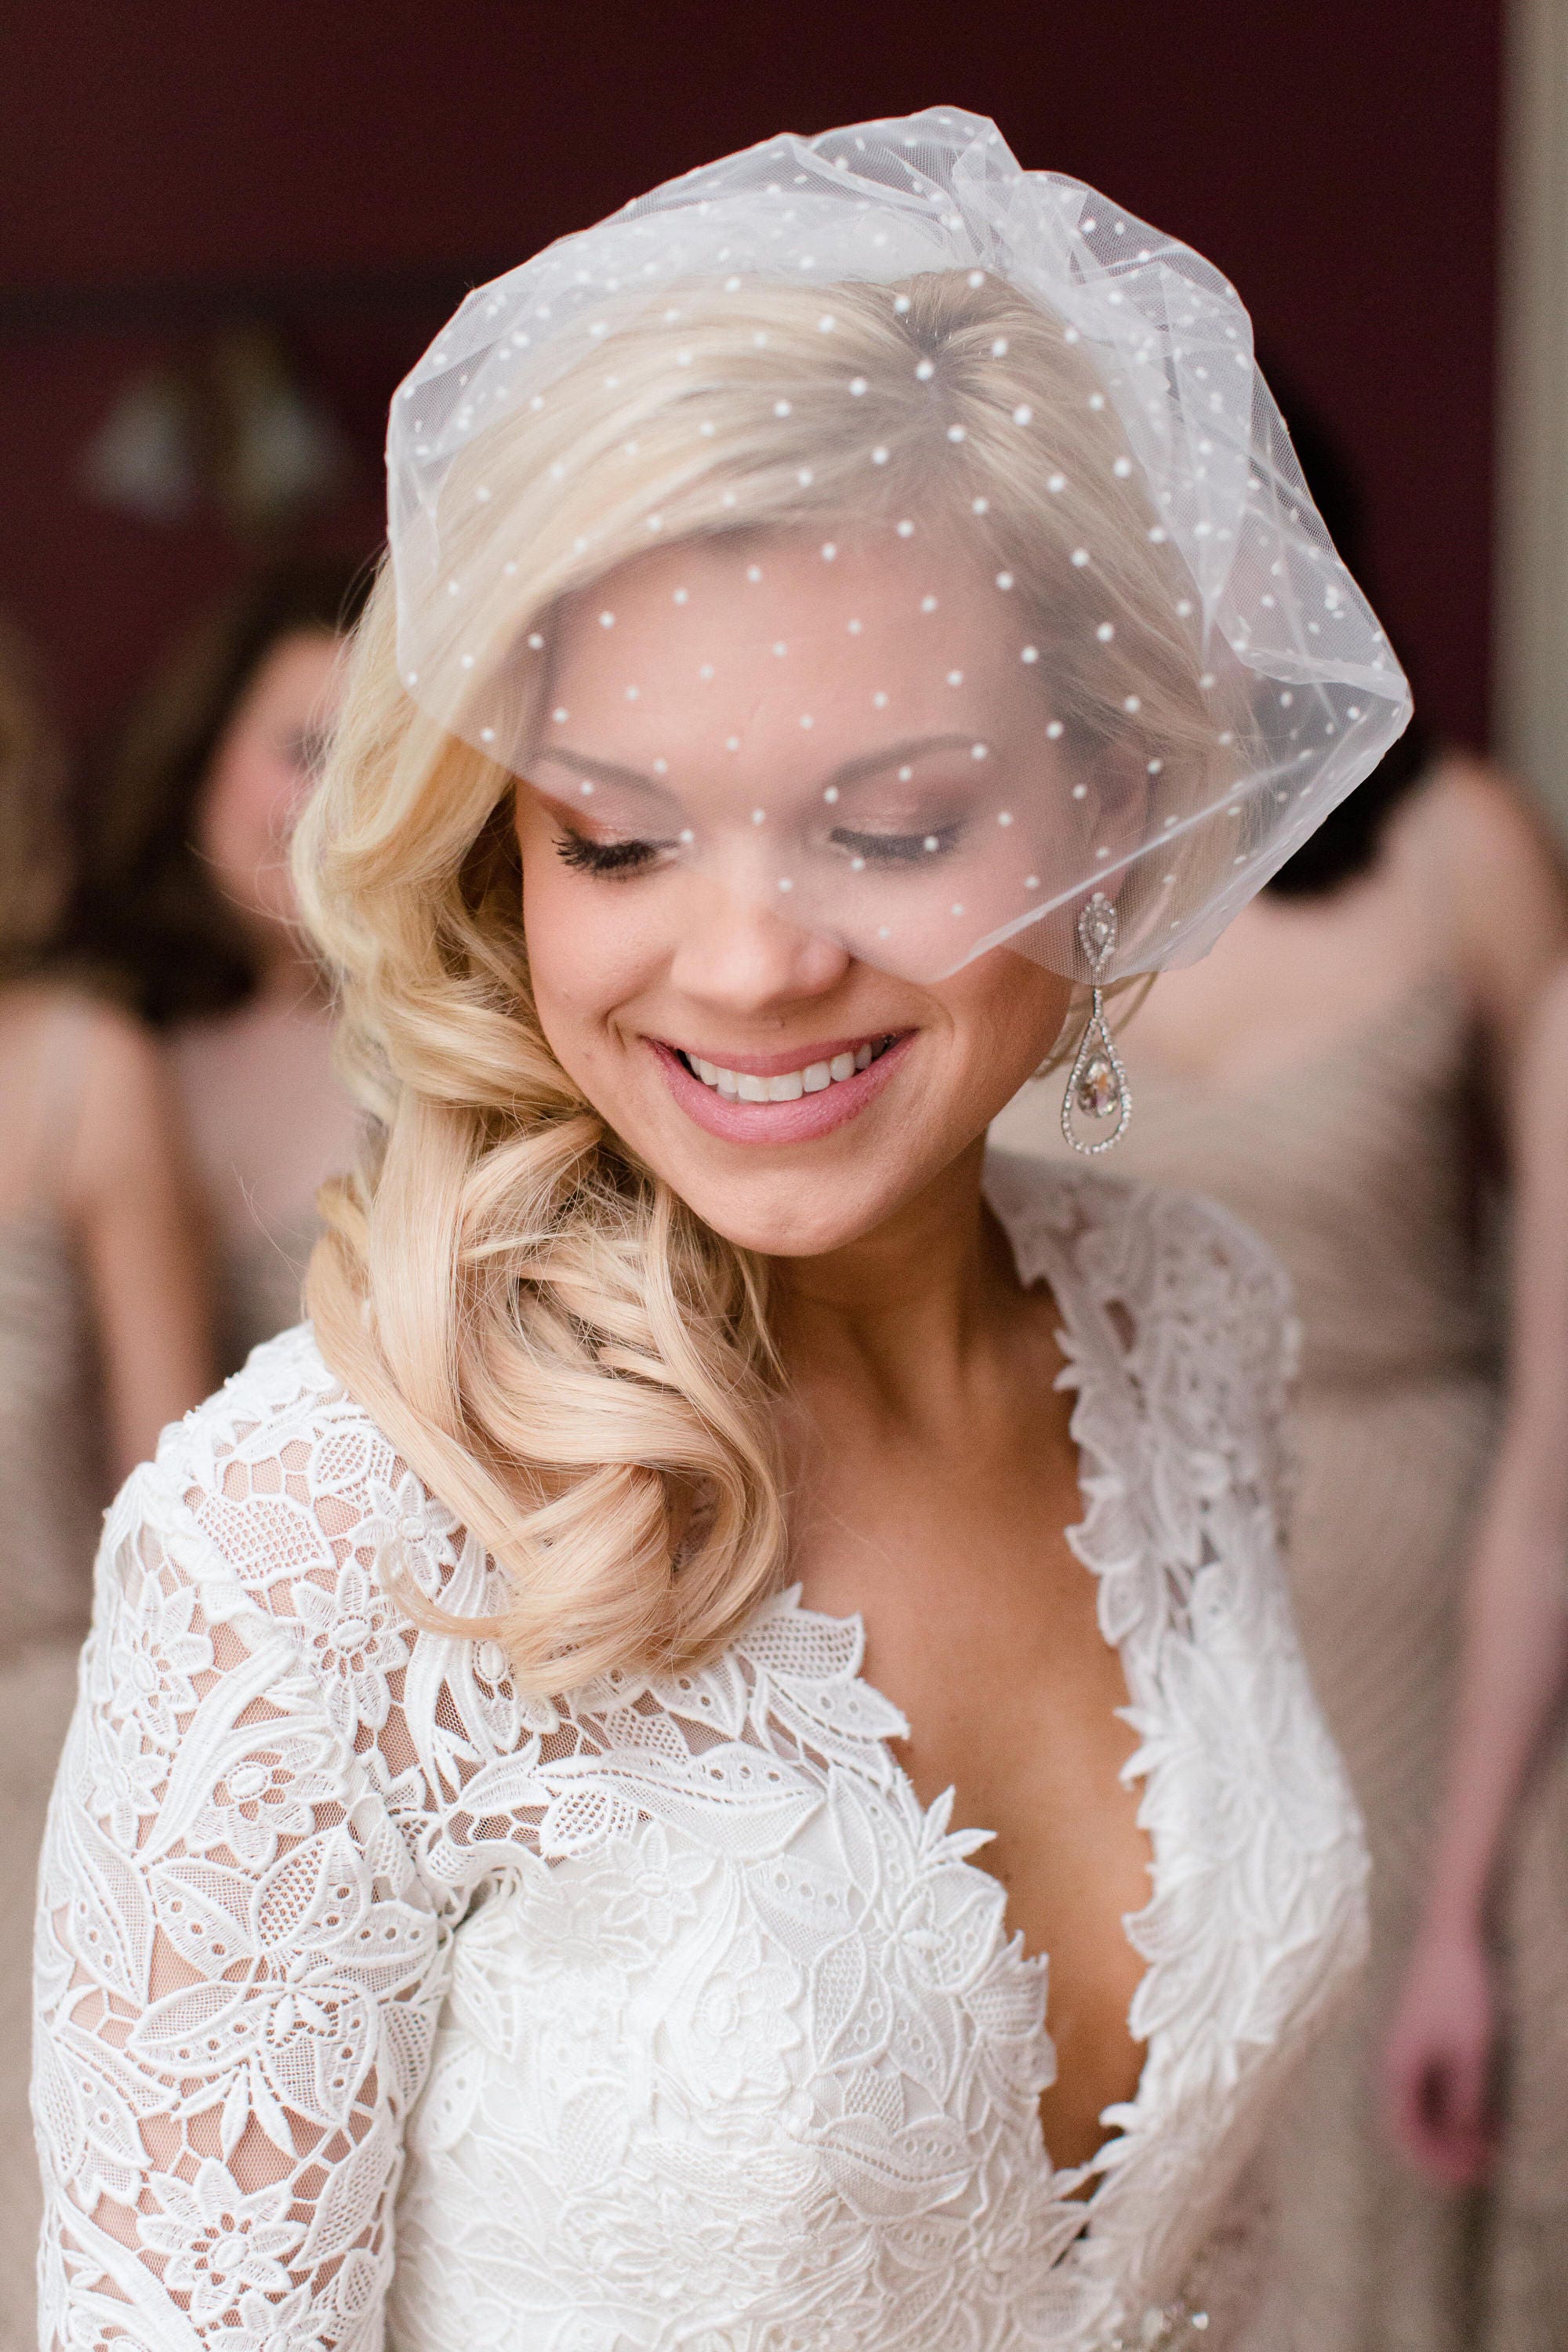 Twigs & Honey Bridal Crystal Veil, Weddings - Crystal Streamers Bridal Train Veil - Style #2068